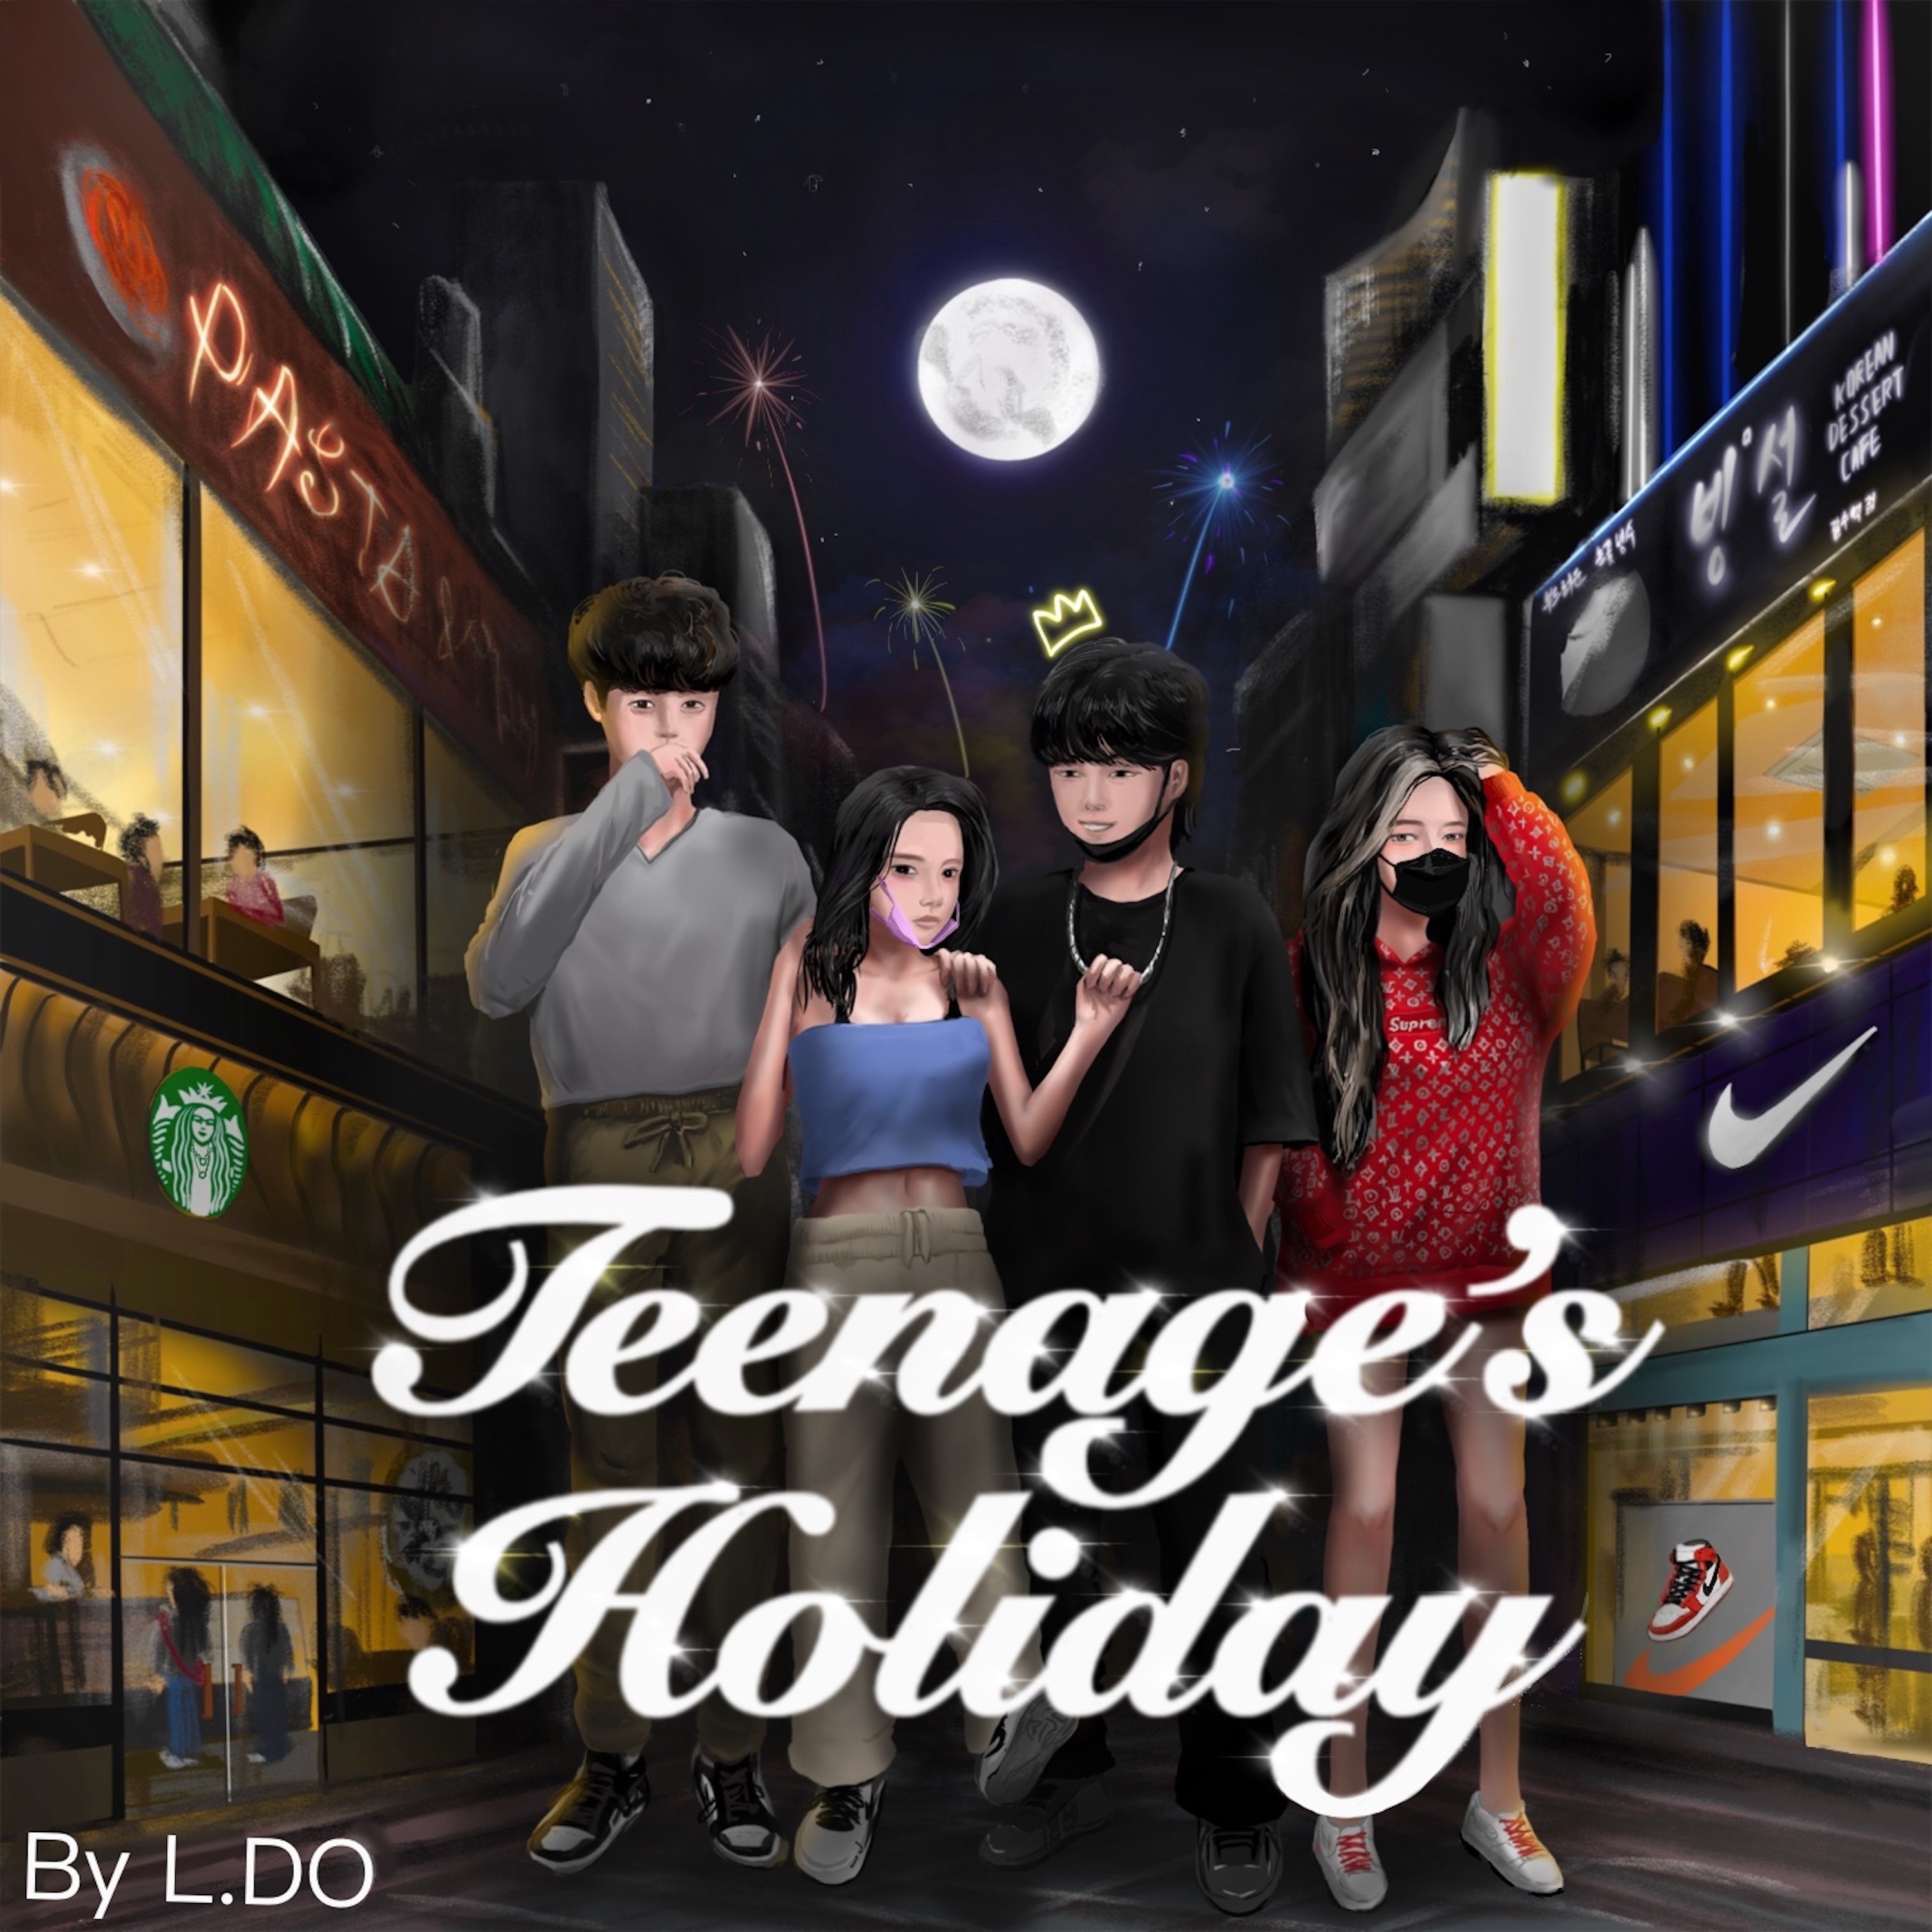 Teenage's Holiday